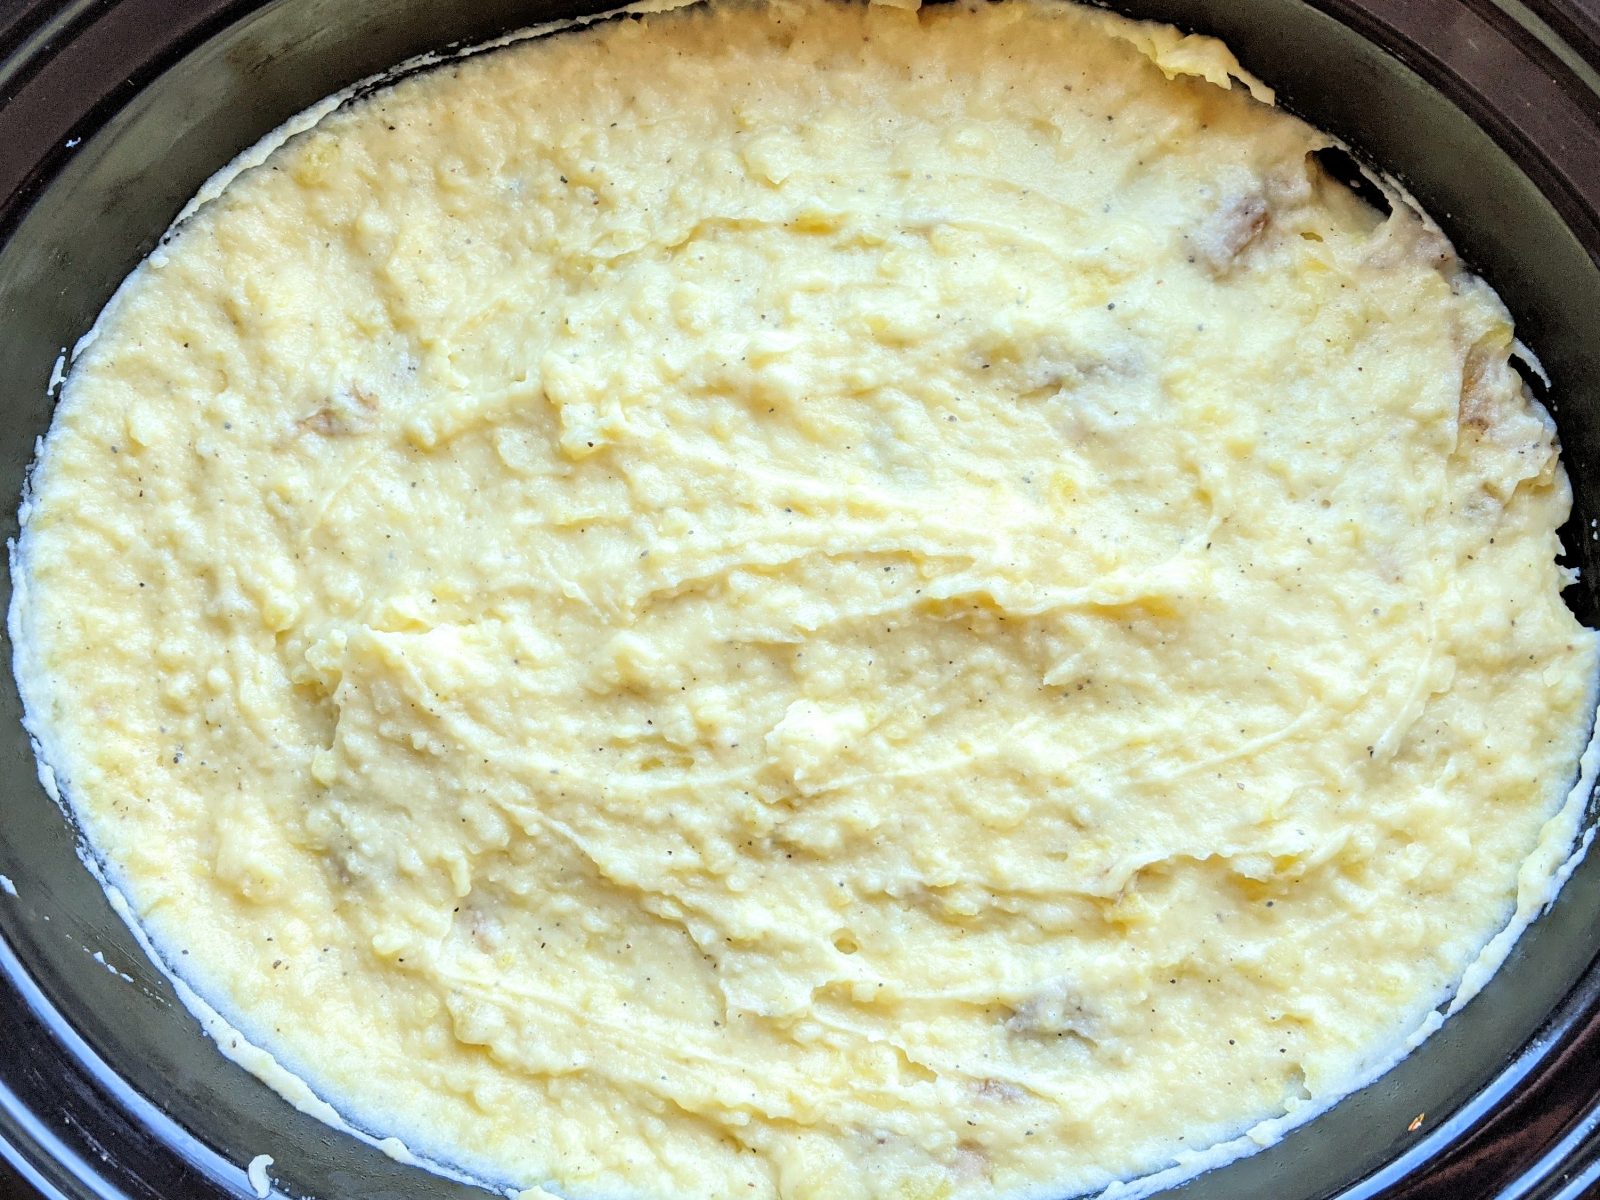 mashed potatoes on top of shepherd's pie in crock pot